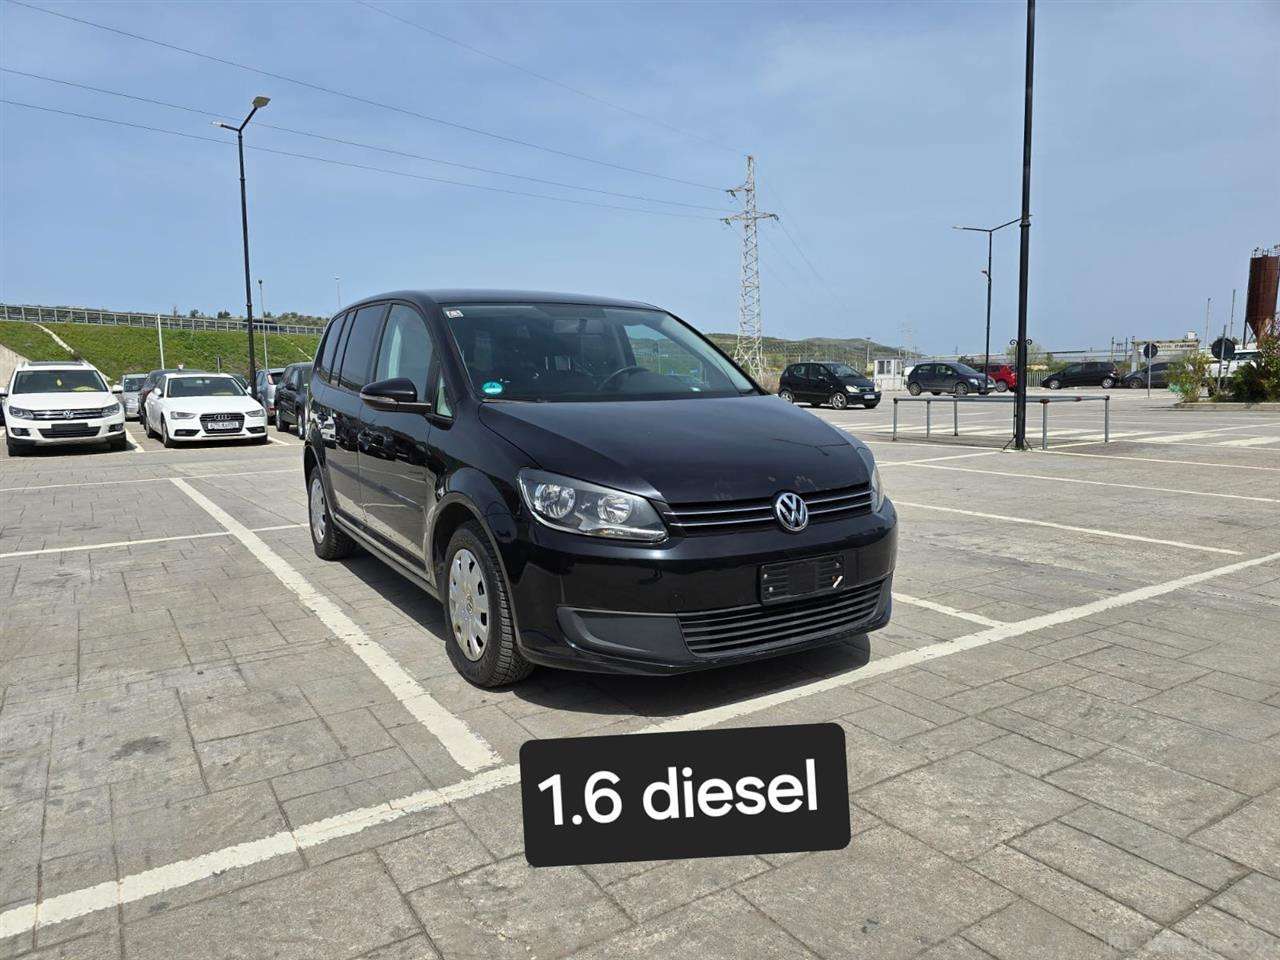 VW Touran 1.6 diesel 